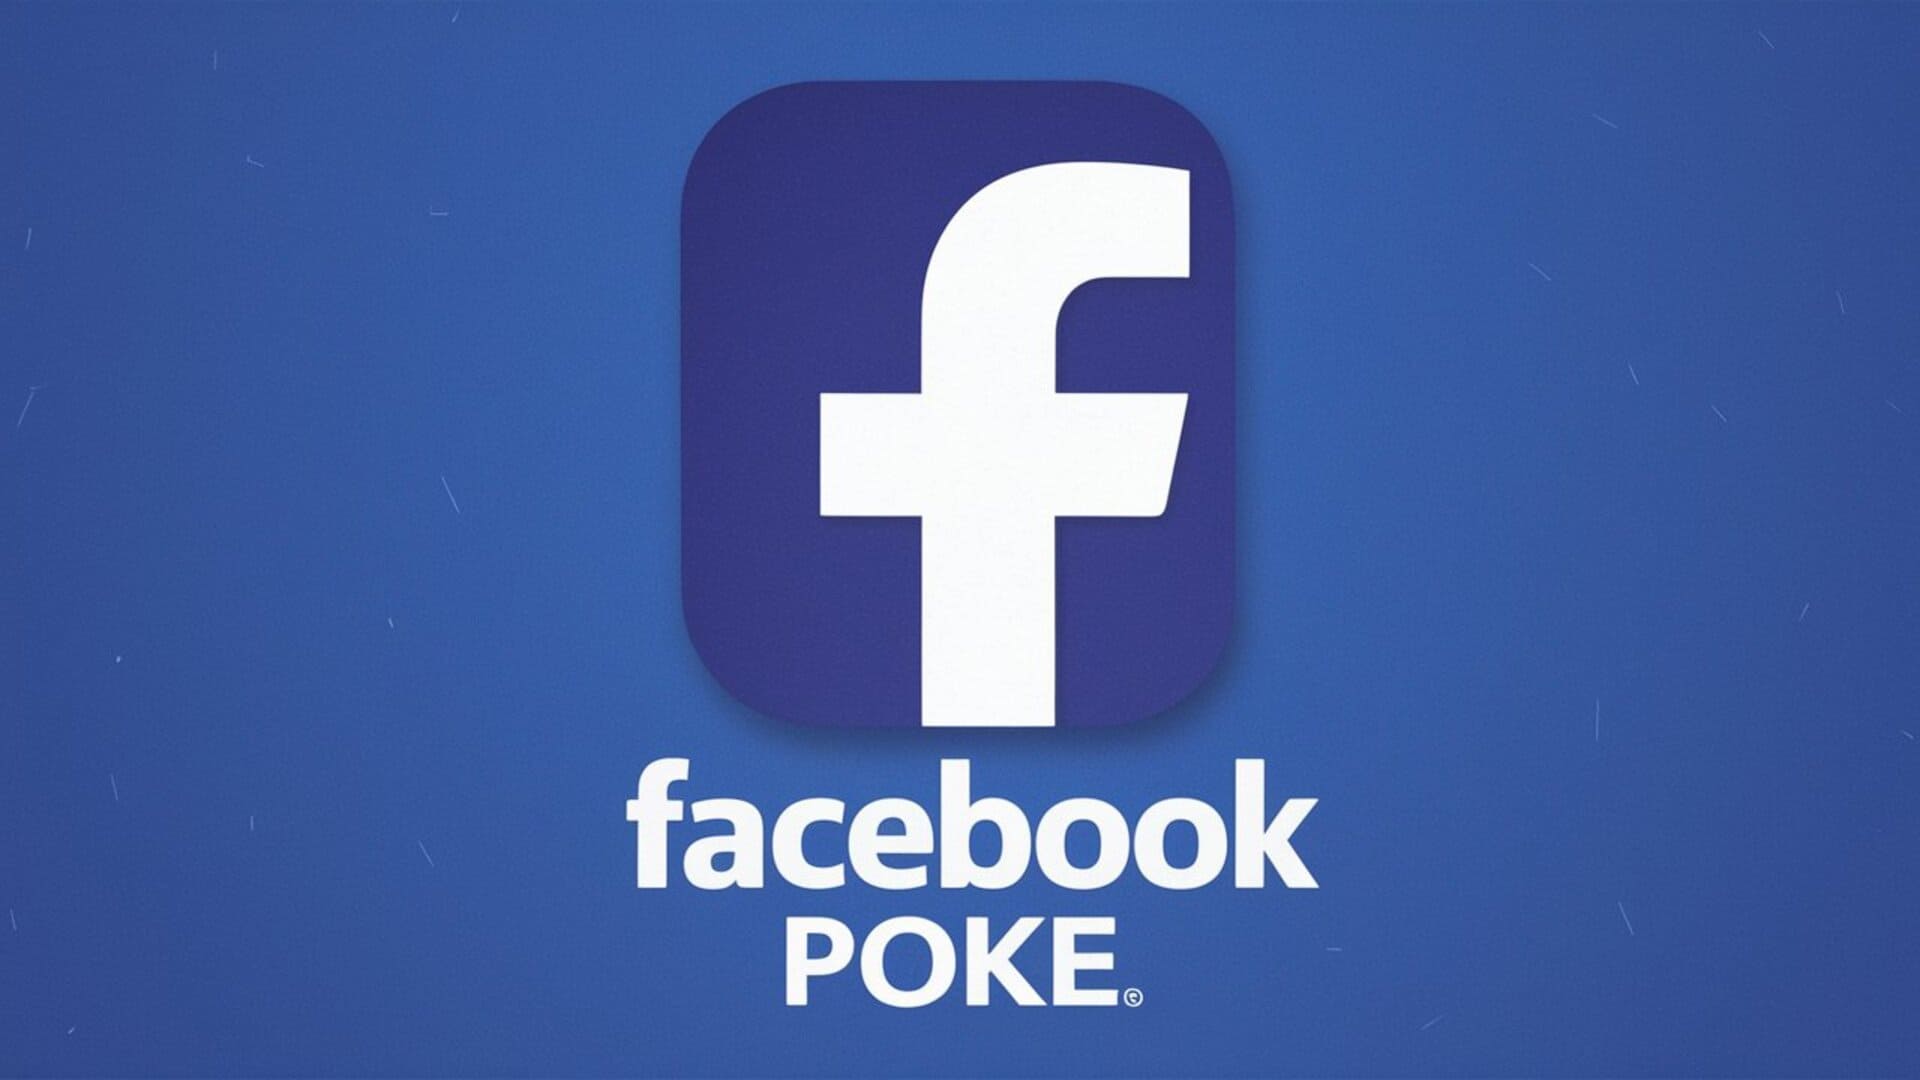 Details About FaceBook Poke Feature; FaceBook Poke Feature